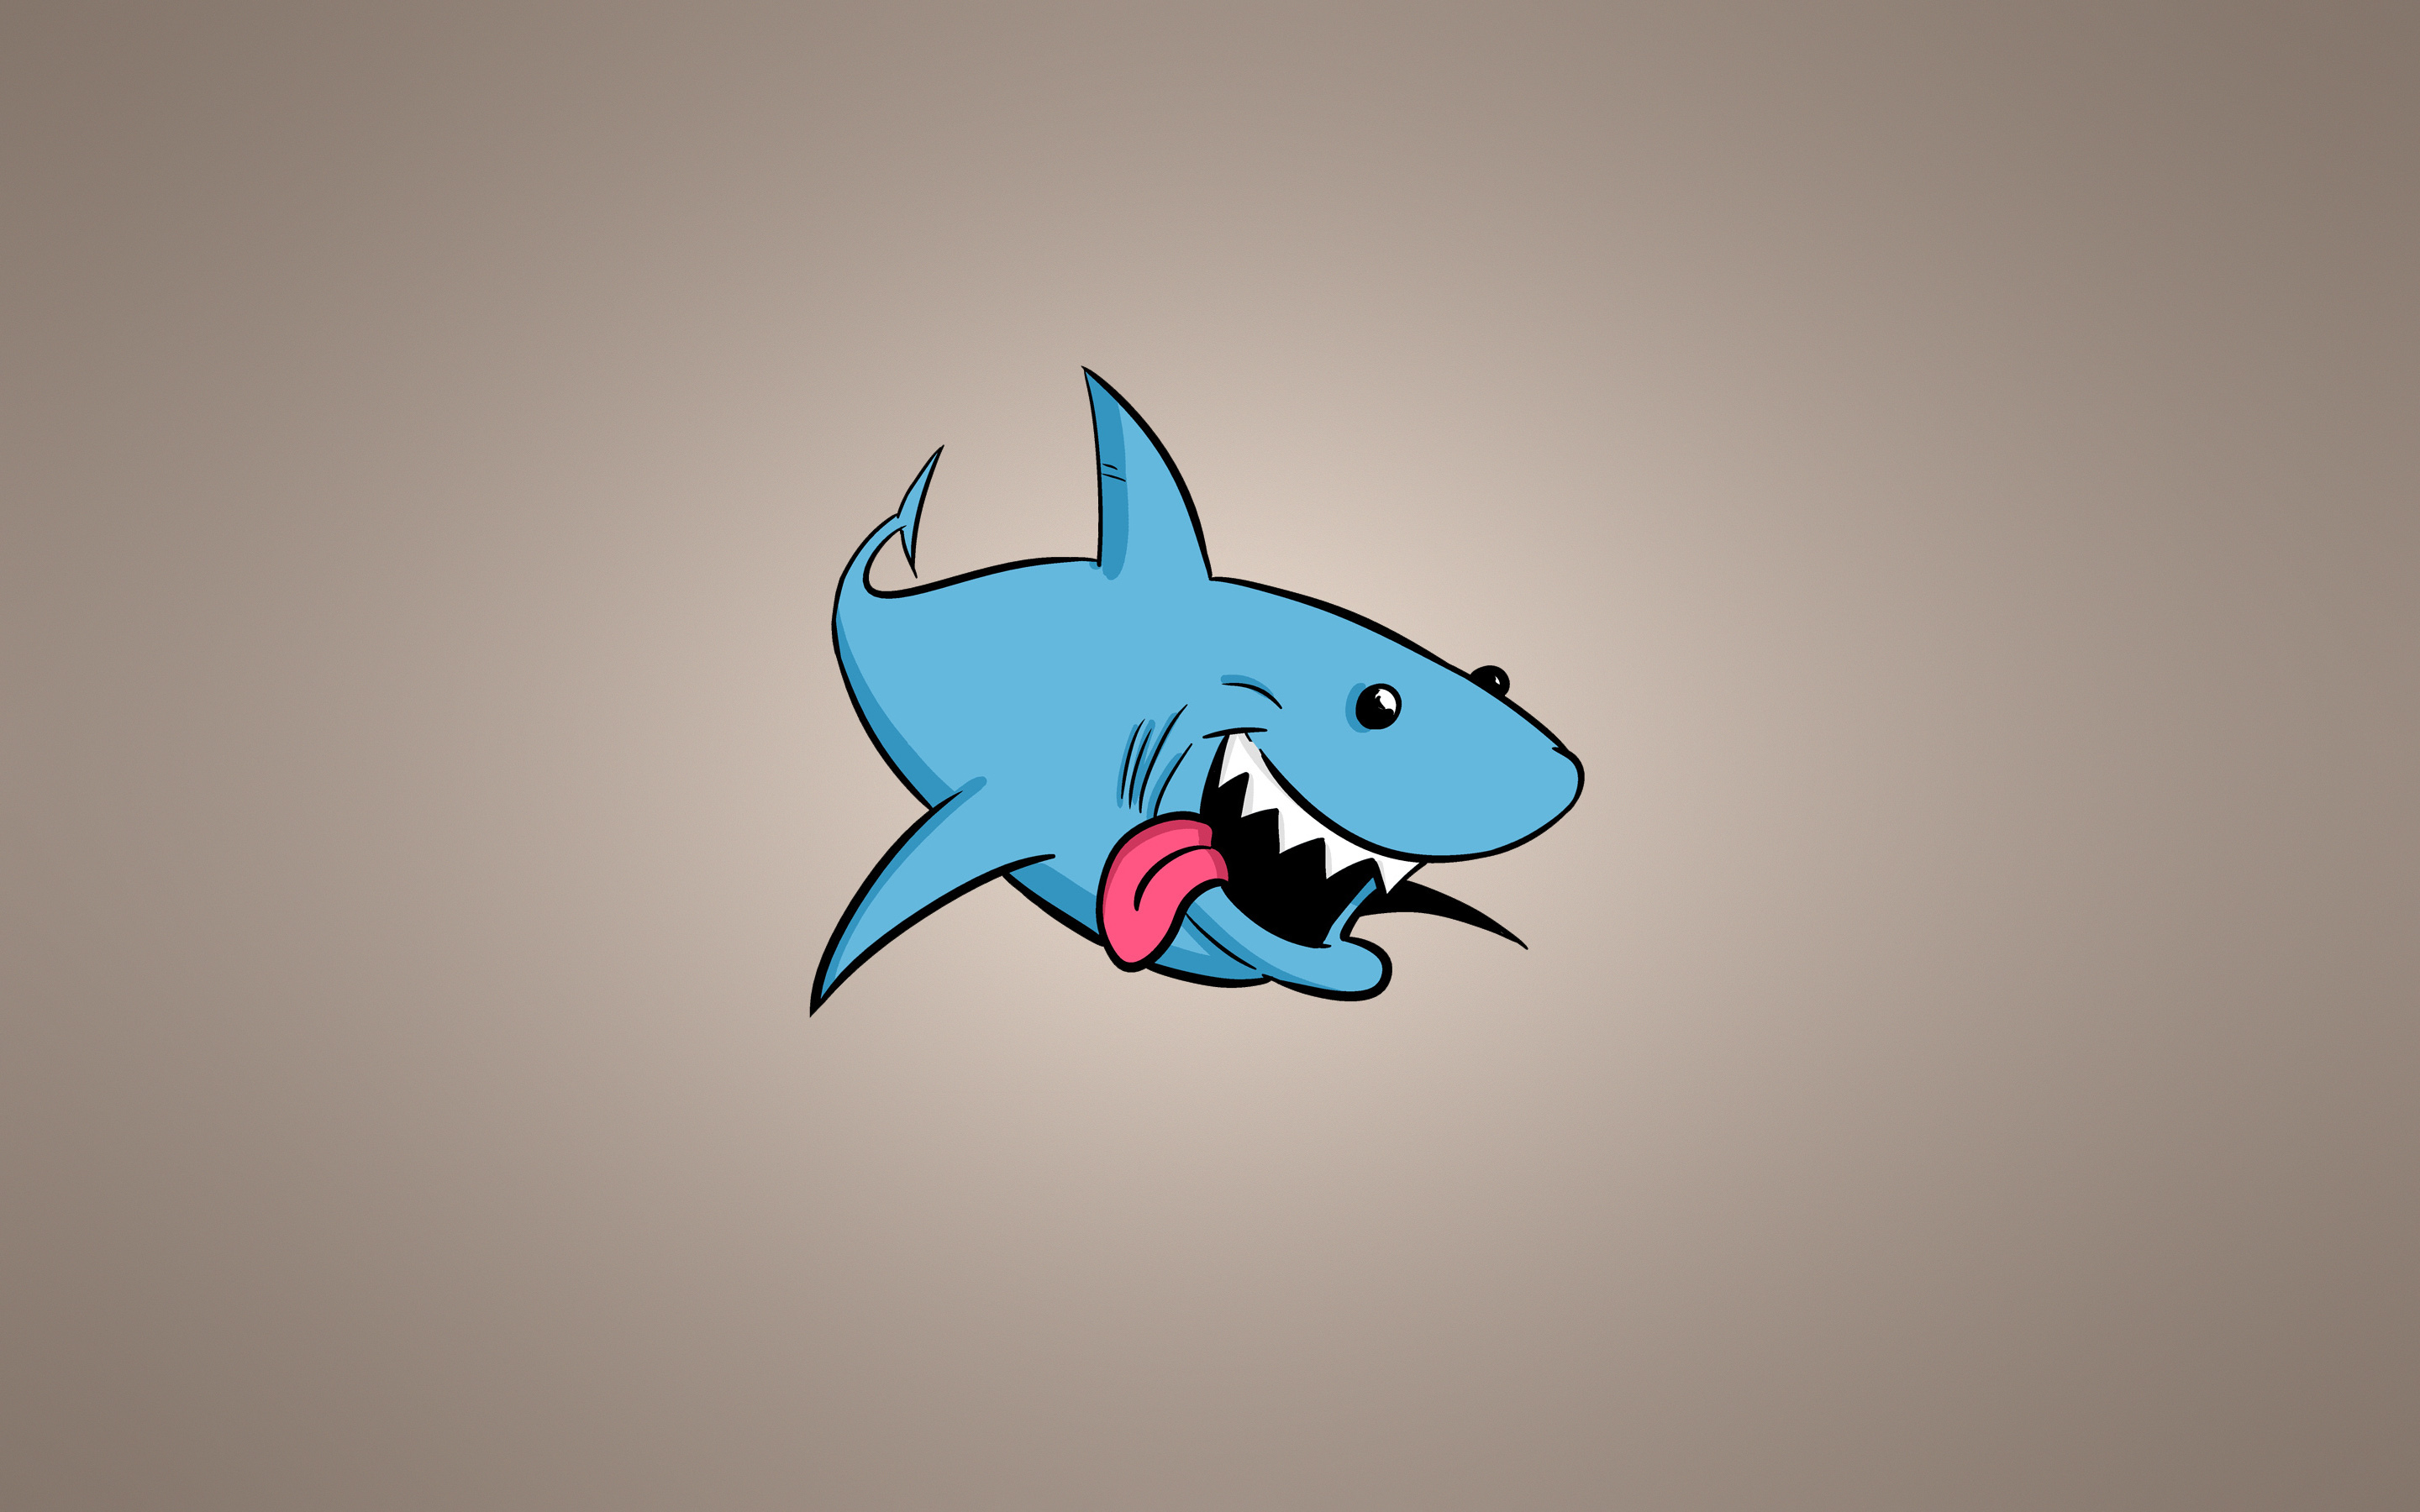 70209 descargar imagen tiburón, fondo, arte, vector, lengua saliente, lengua pegada hacia fuera: fondos de pantalla y protectores de pantalla gratis